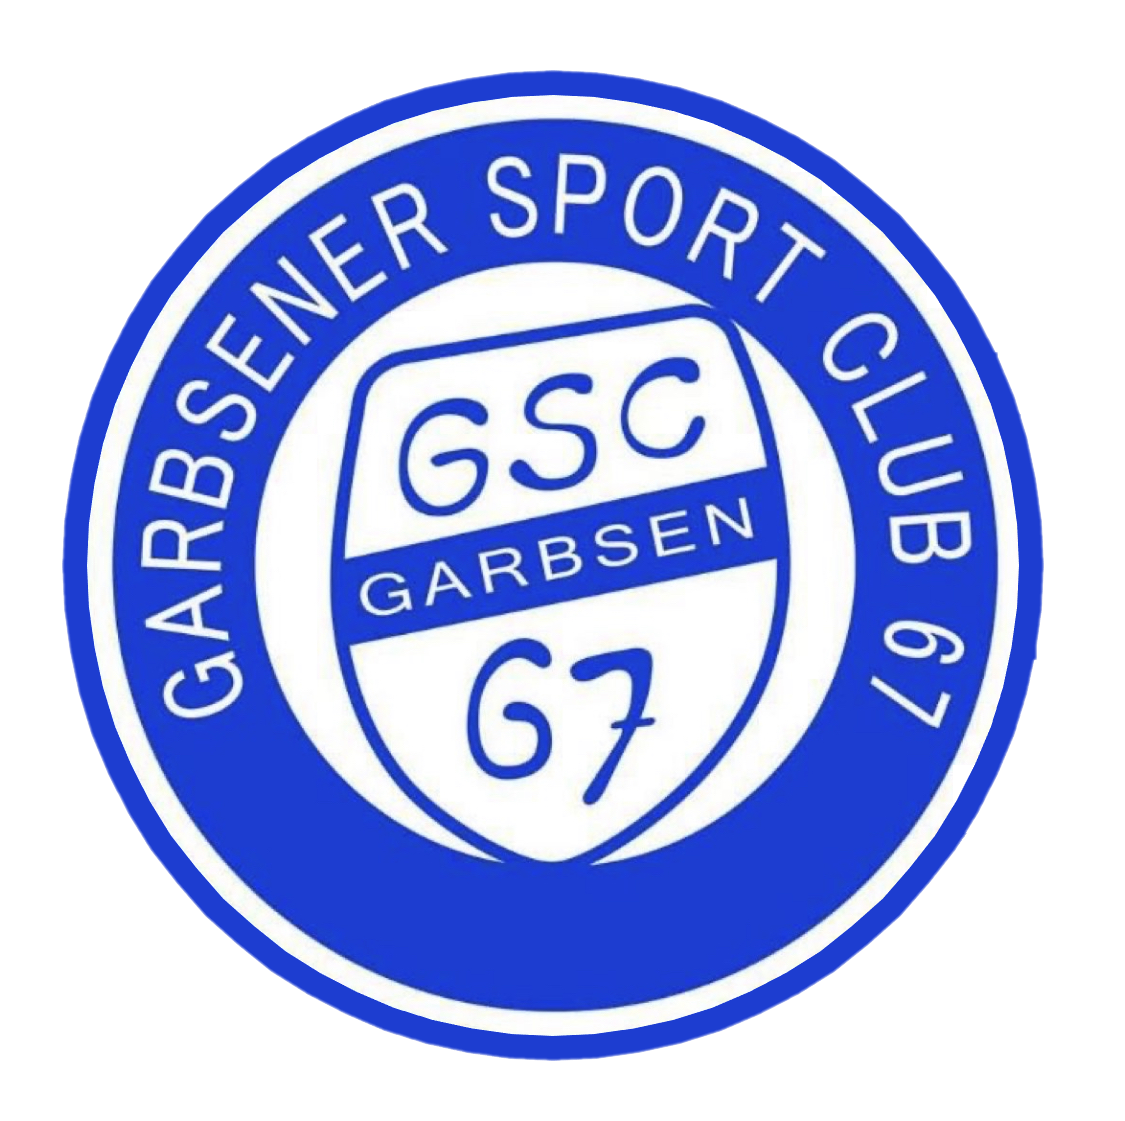 Bezirkssportplatz des Garbsener Sport-Club 67 e. V.